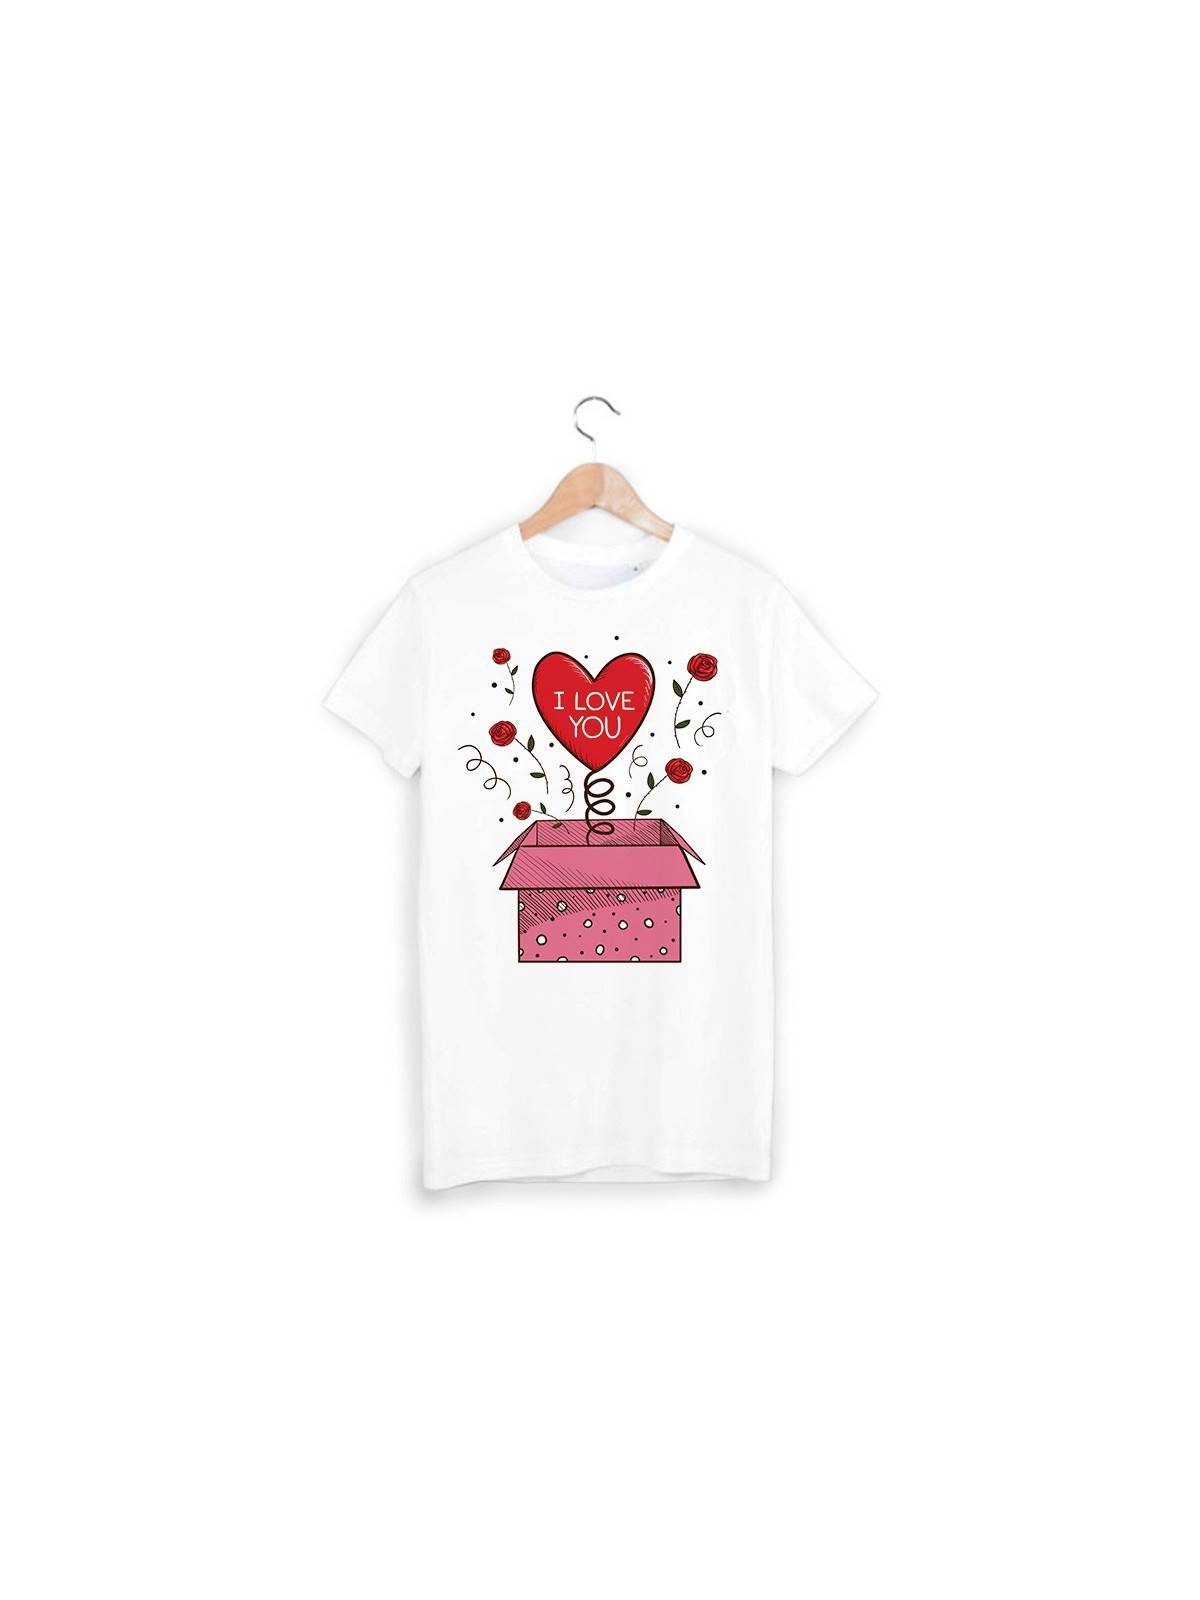 T-Shirt coeur saint valentin ref 1327